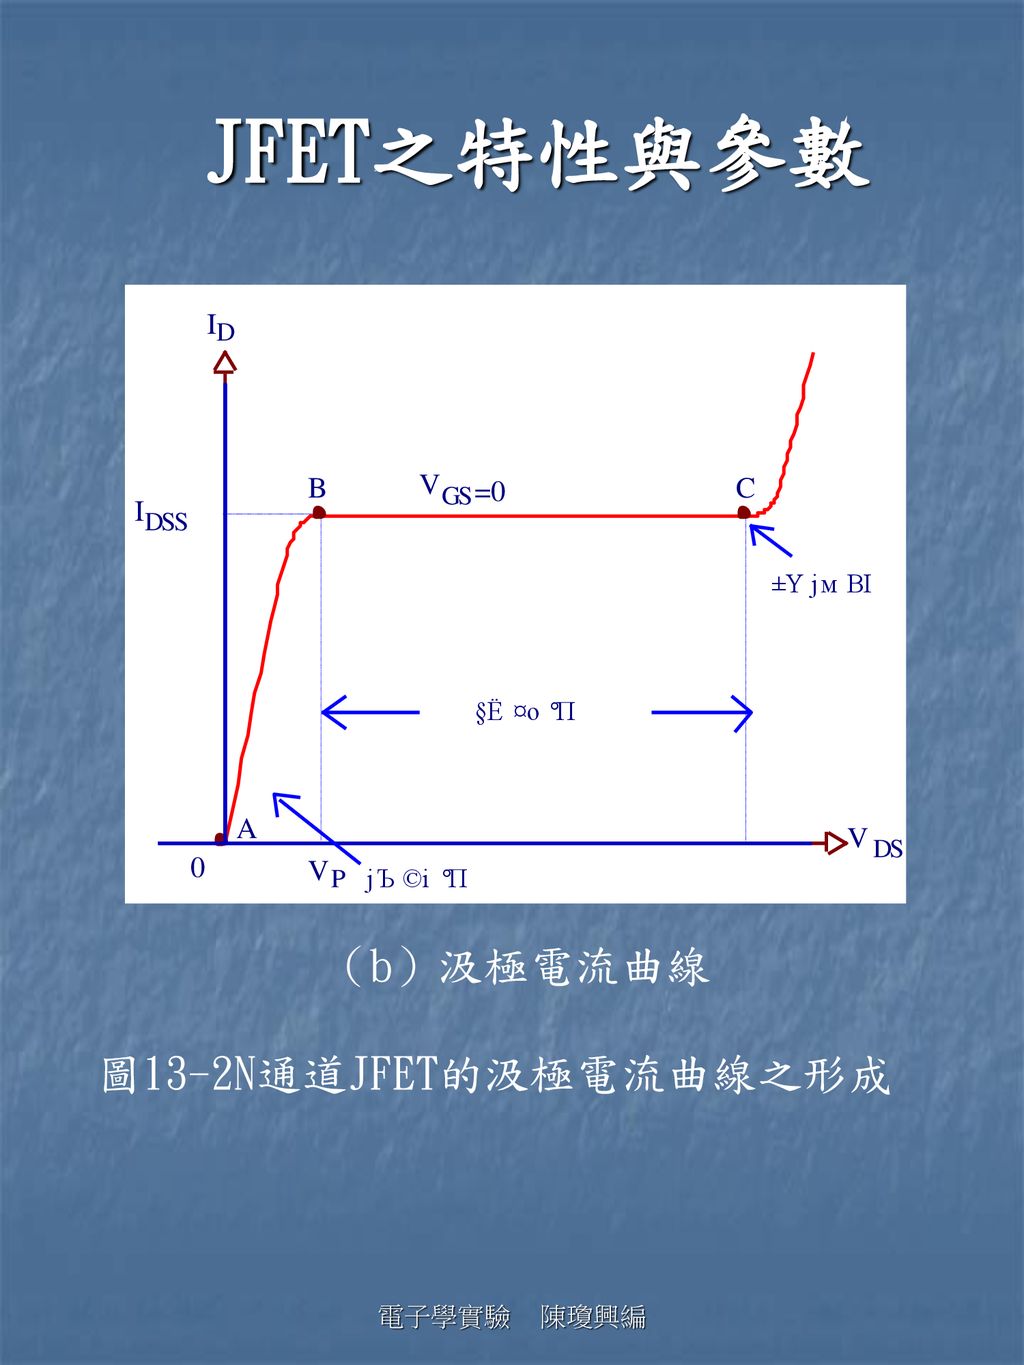 JFET之特性與參數 （b）汲極電流曲線 圖13-2N通道JFET的汲極電流曲線之形成 電子學實驗 陳瓊興編